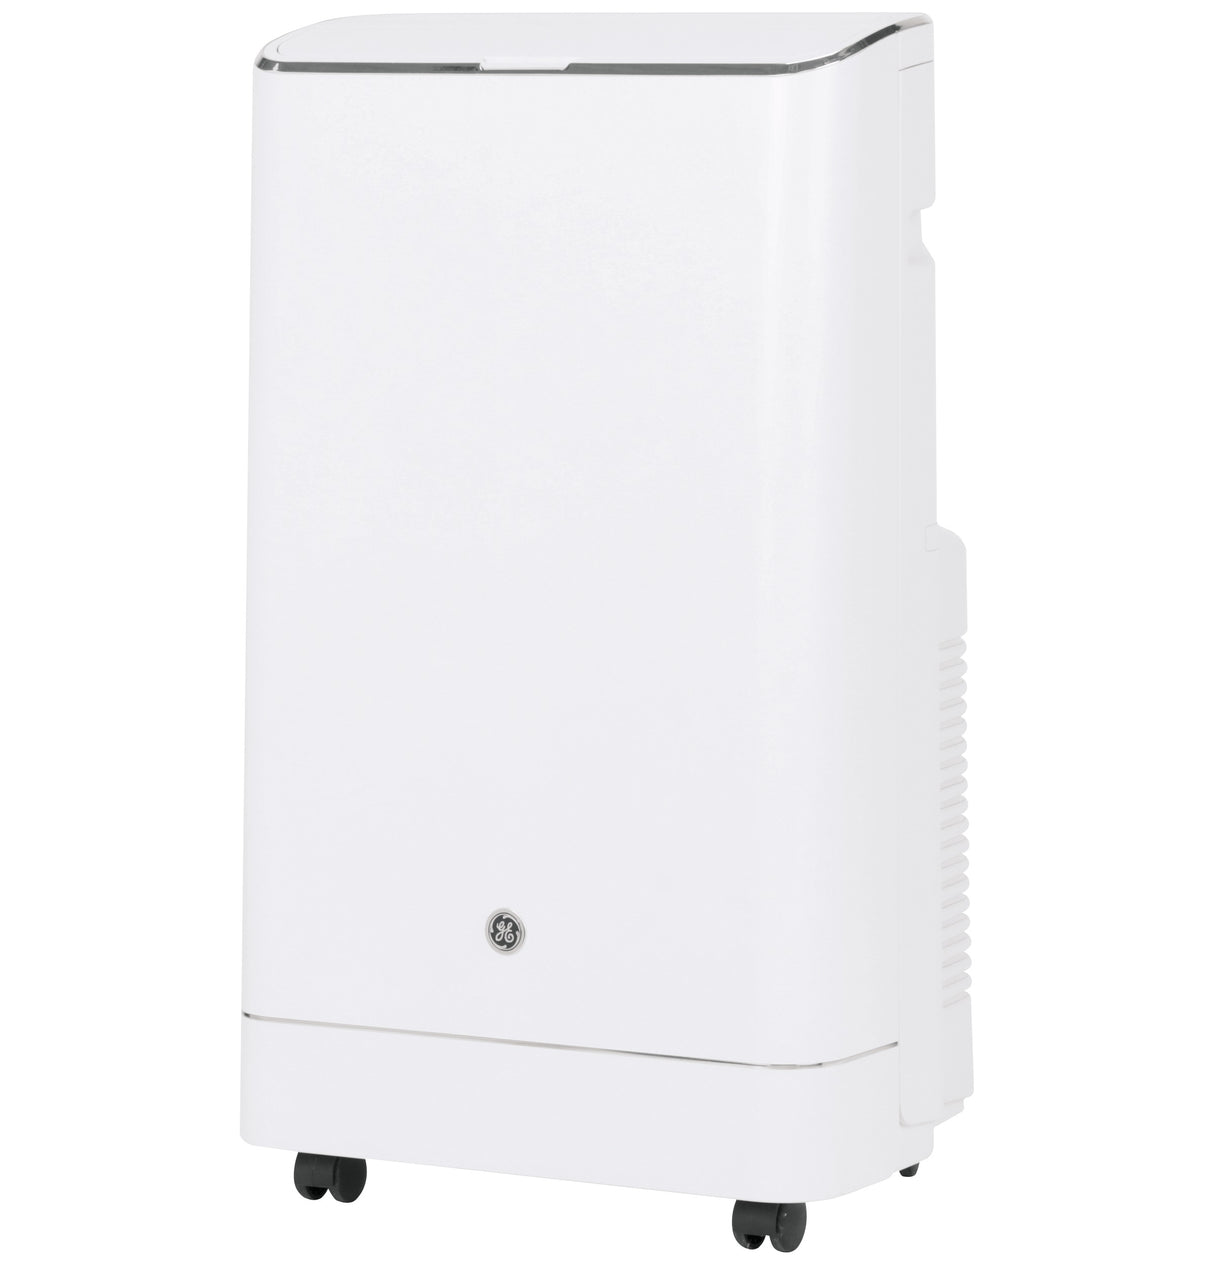 GE(R) 14,000 BTU Portable Air Conditioner for Medium Rooms up to 550 sq ft. (9,850 BTU SACC) - (APCA14YBMW)